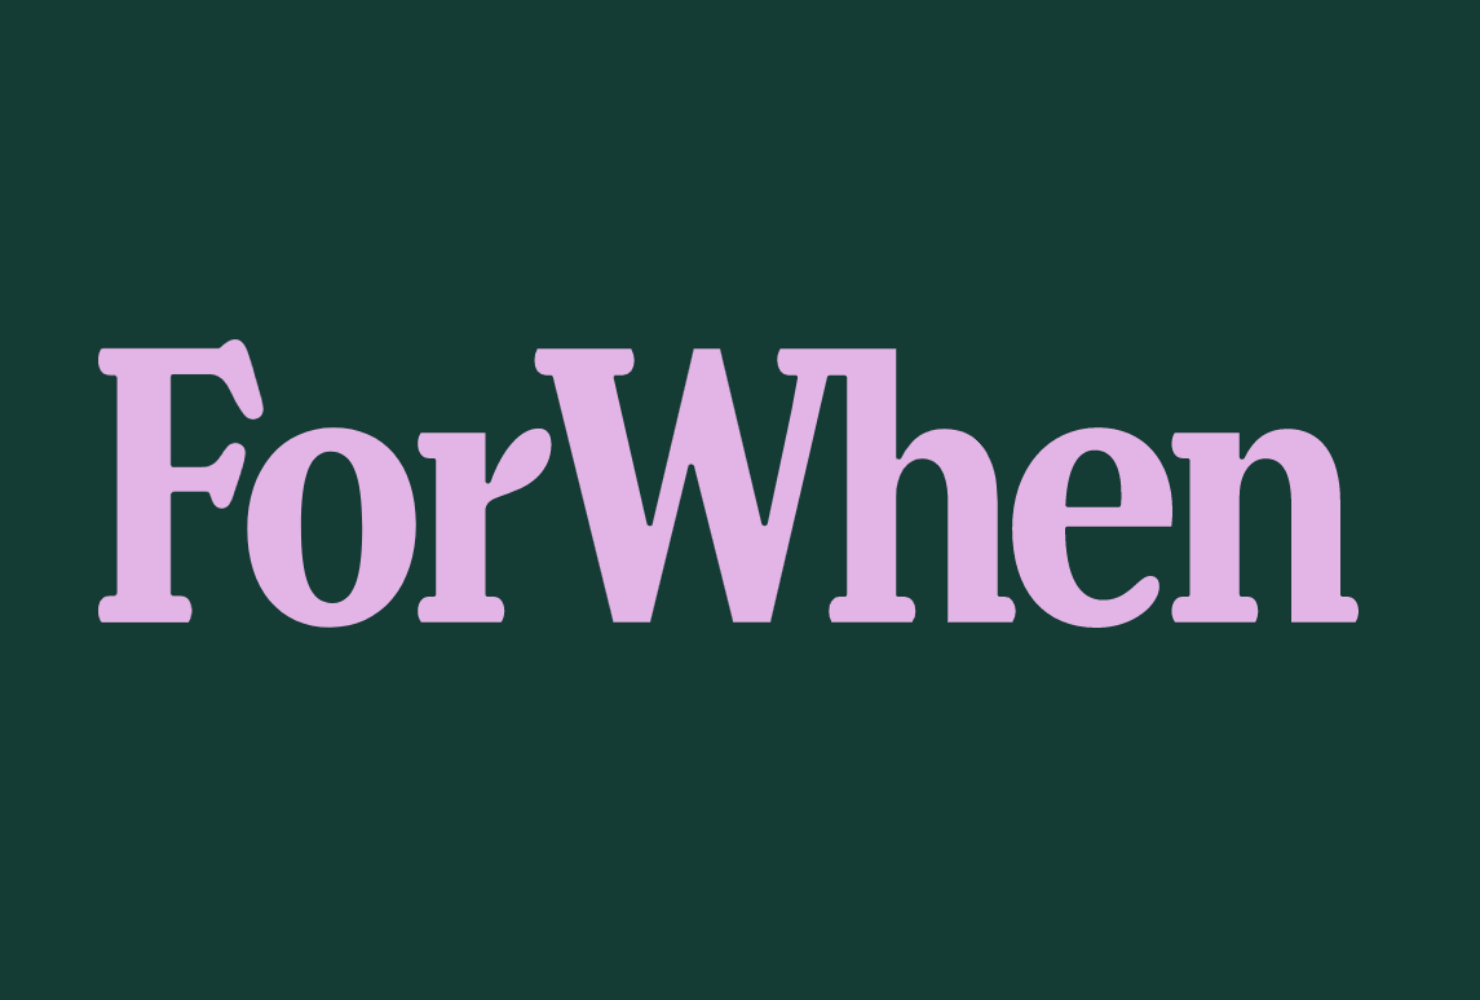 ForWhen logo